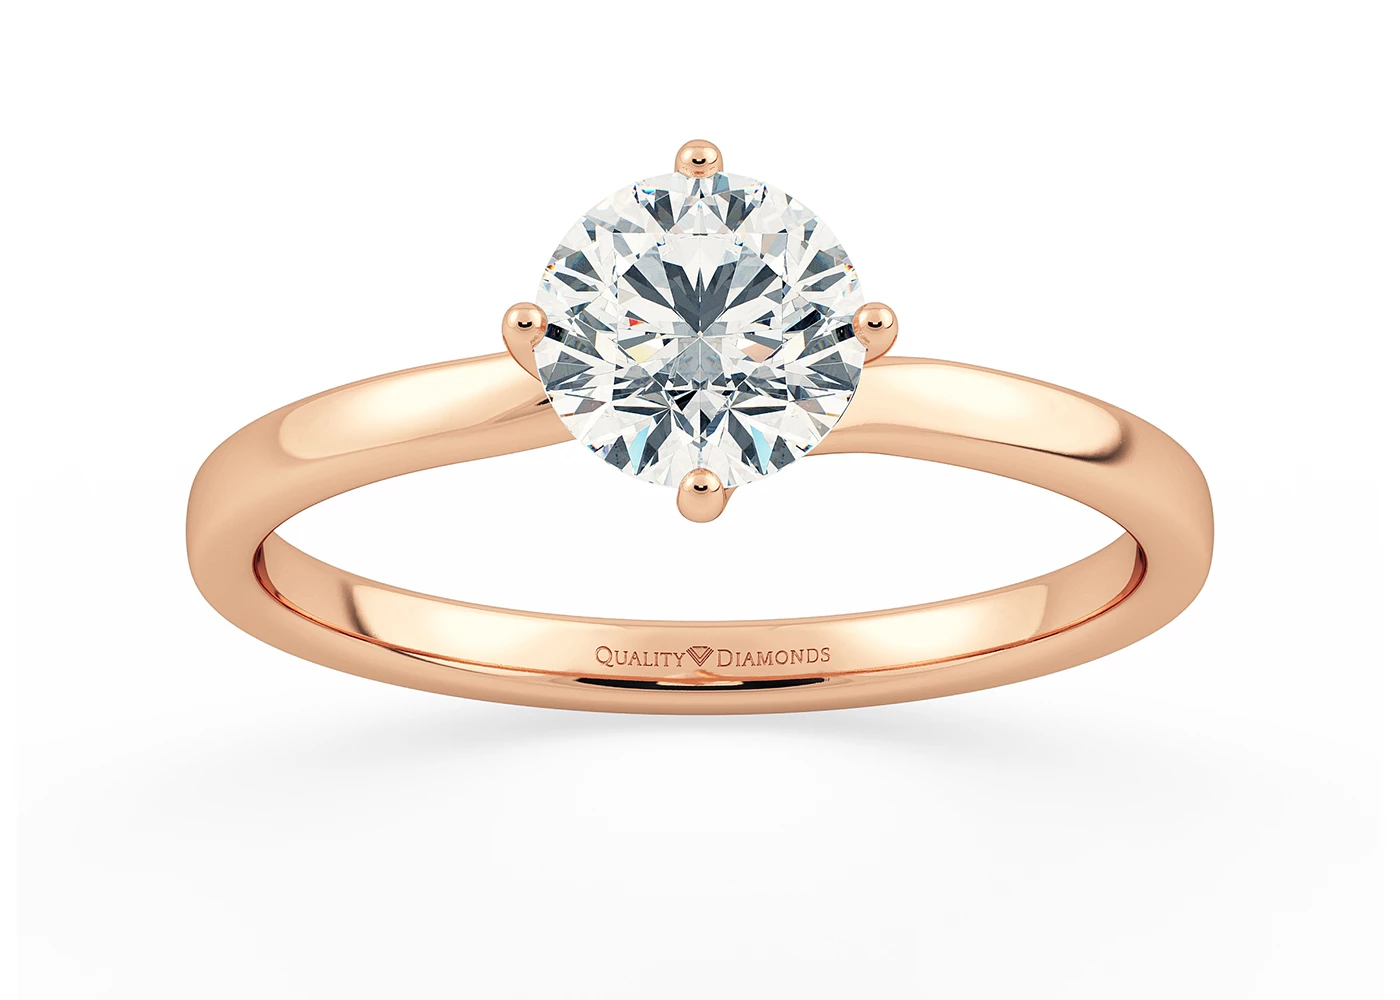 Round Brilliant Abbraccio Diamond Ring in 9K Rose Gold